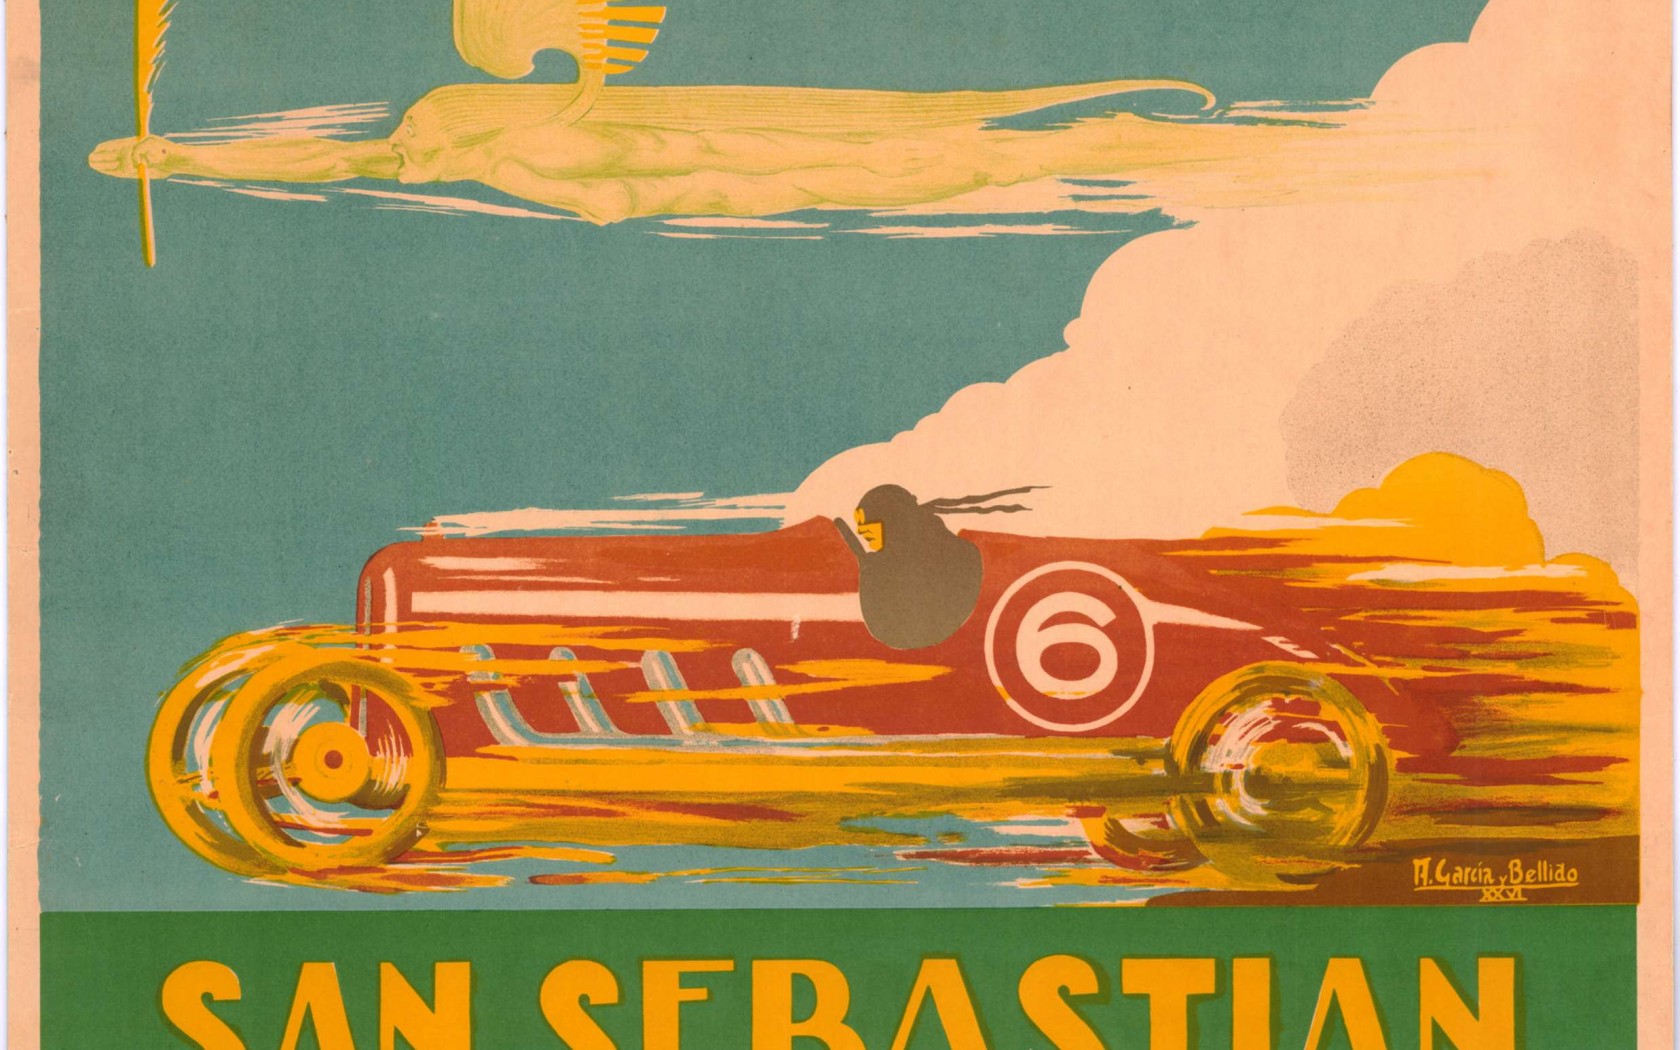 San Sebastian Grand Prix Poster